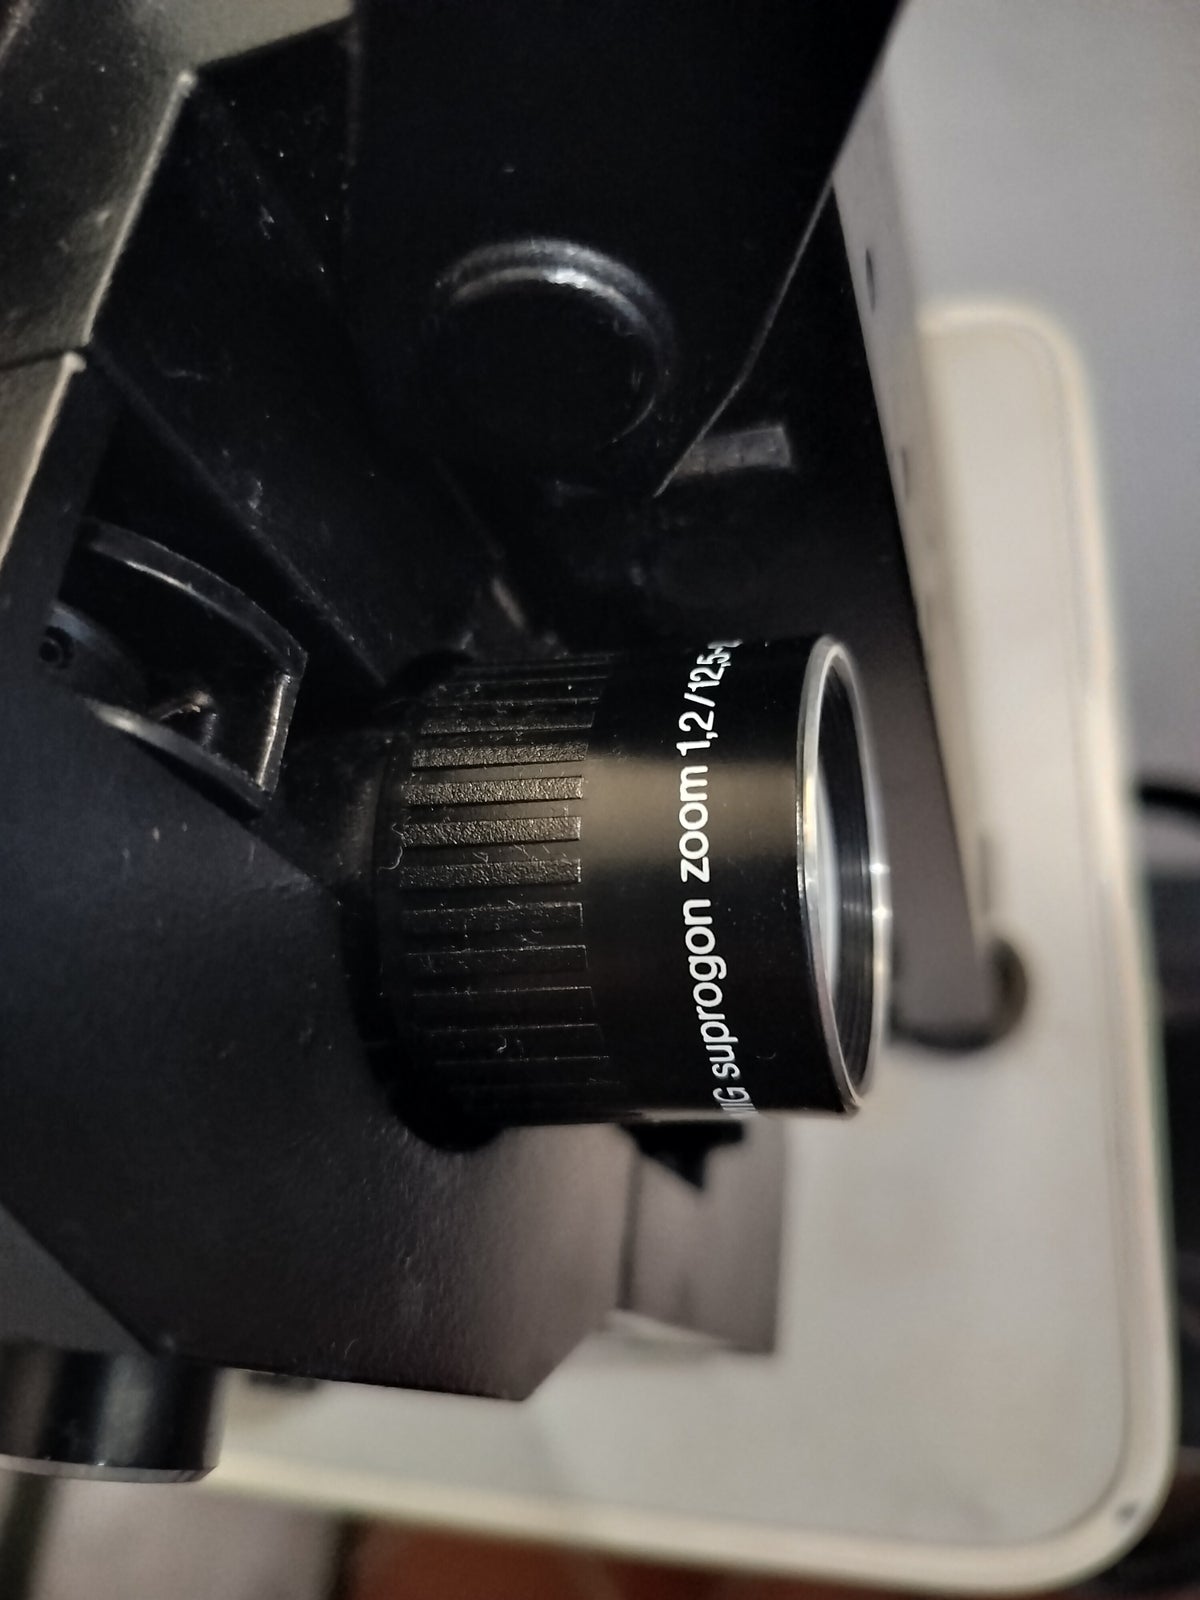 Eumig SonoMatic 824 HQS filmfremviser, Perfekt